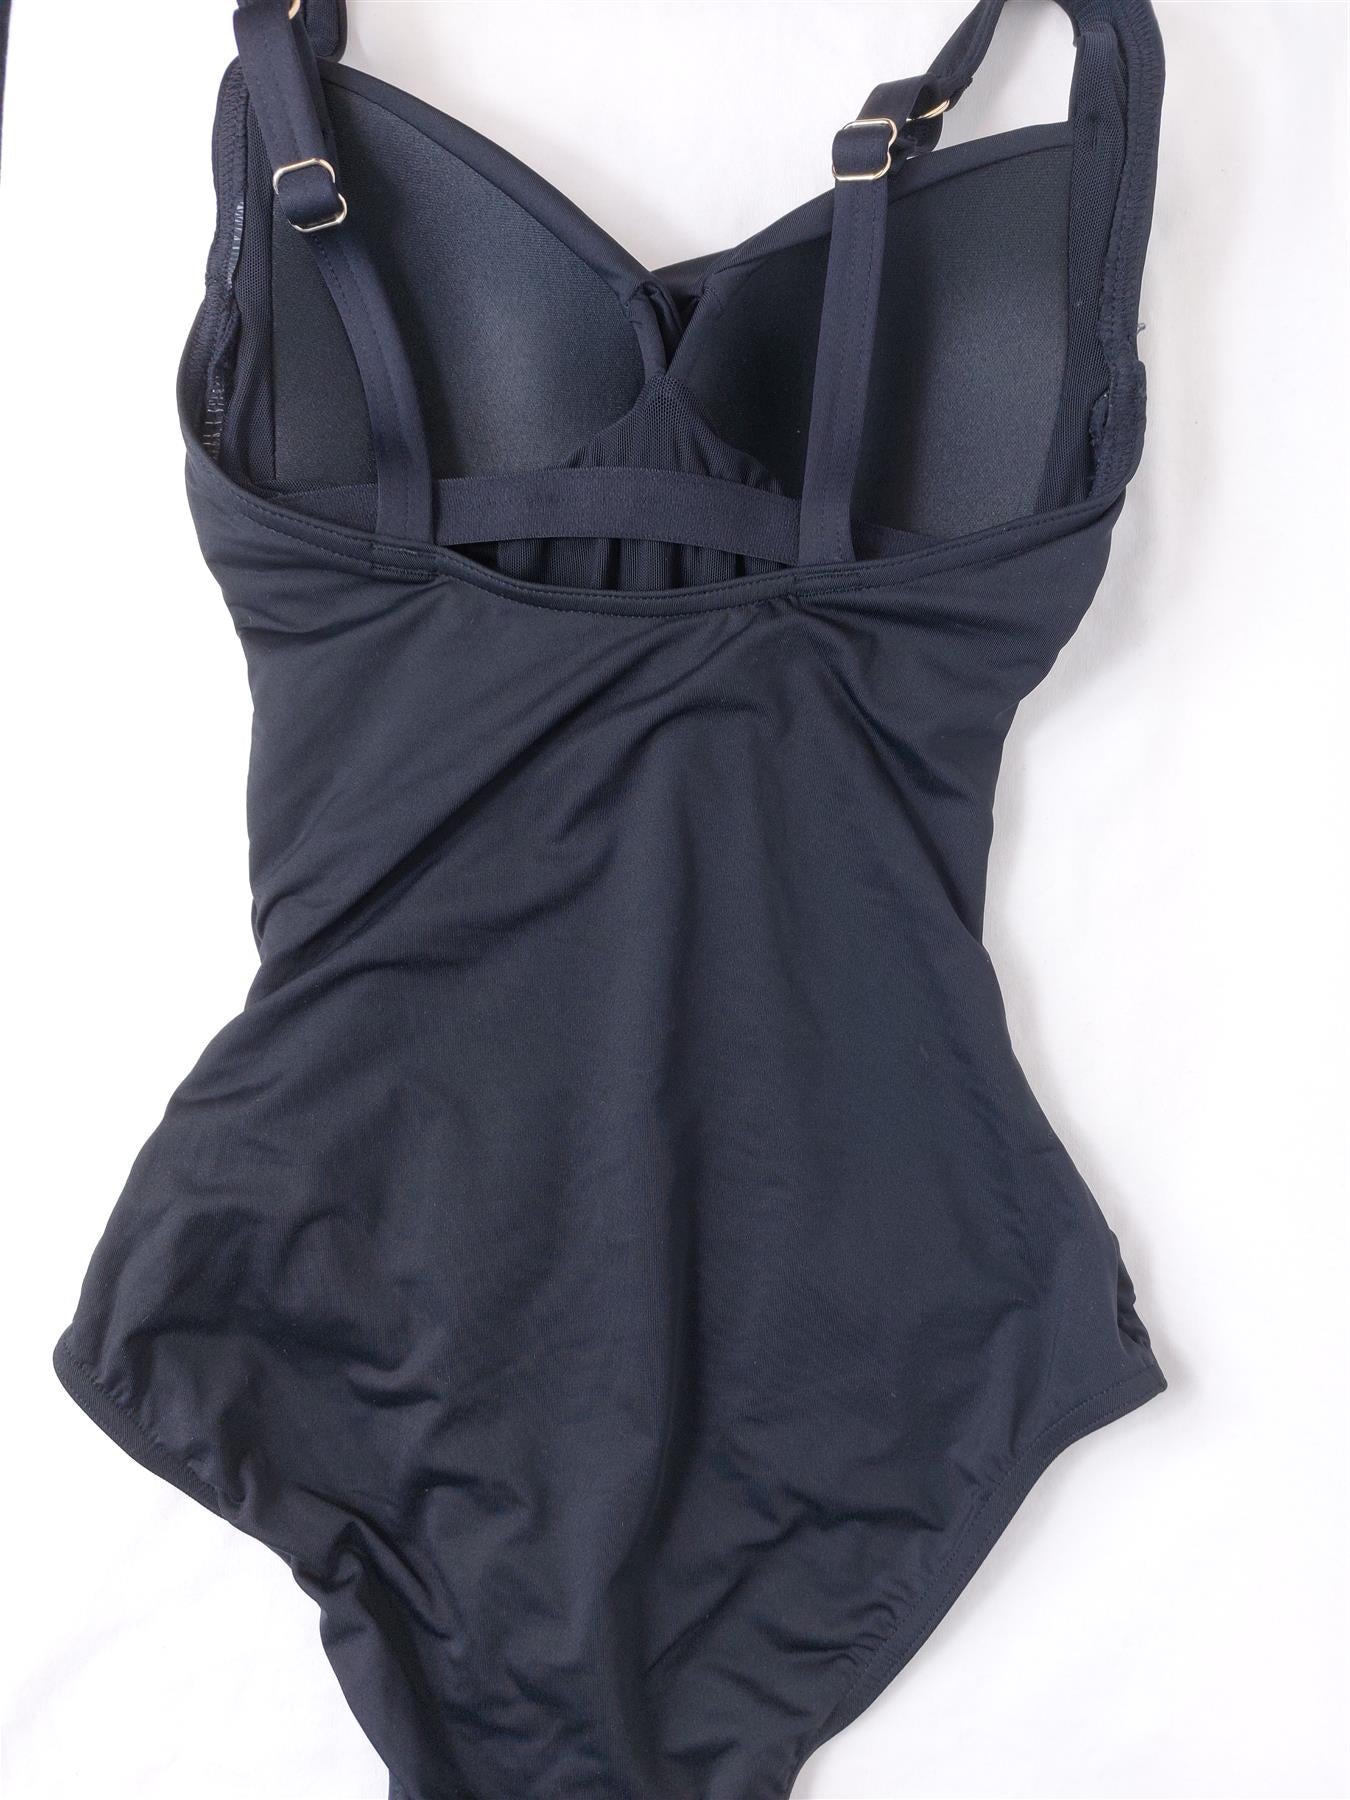 Women's Slimming Swimming Costume Padded Wrap Plunge Swimsuit Brand New